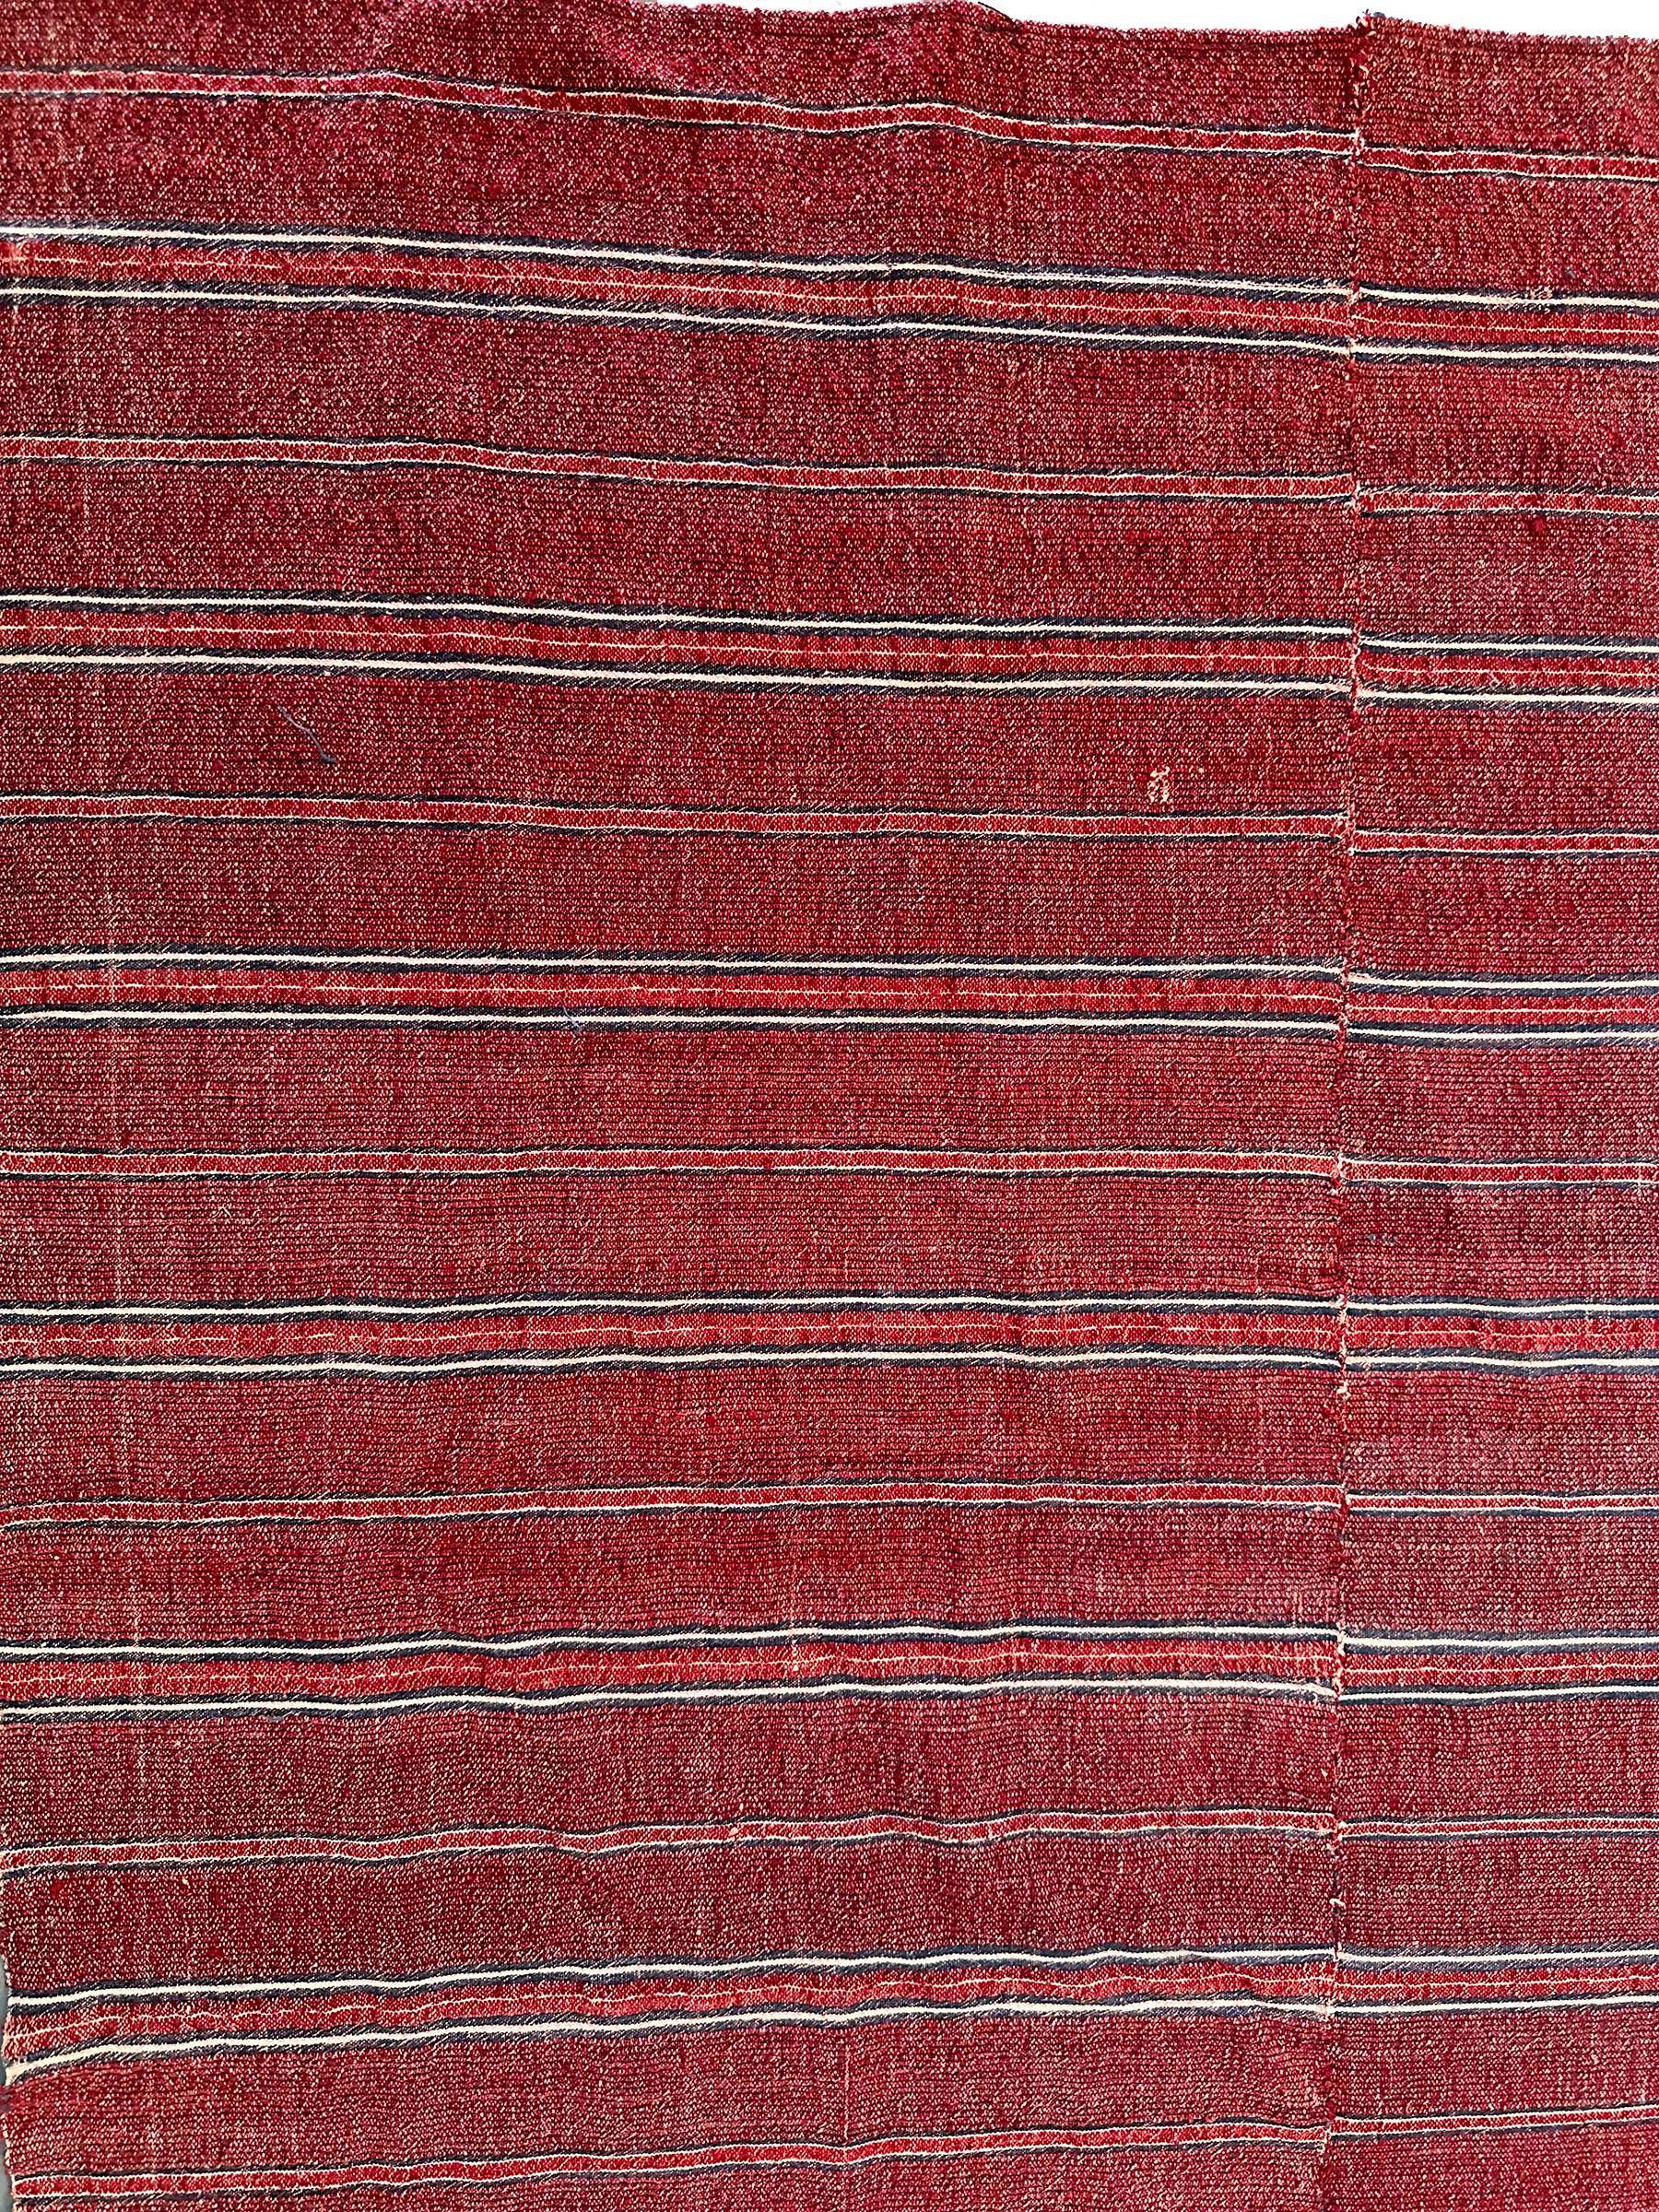 Wool Antique Moroccan Kelim Kilim Rug Tapestry Handmade 6x8 178cm x 226cm For Sale